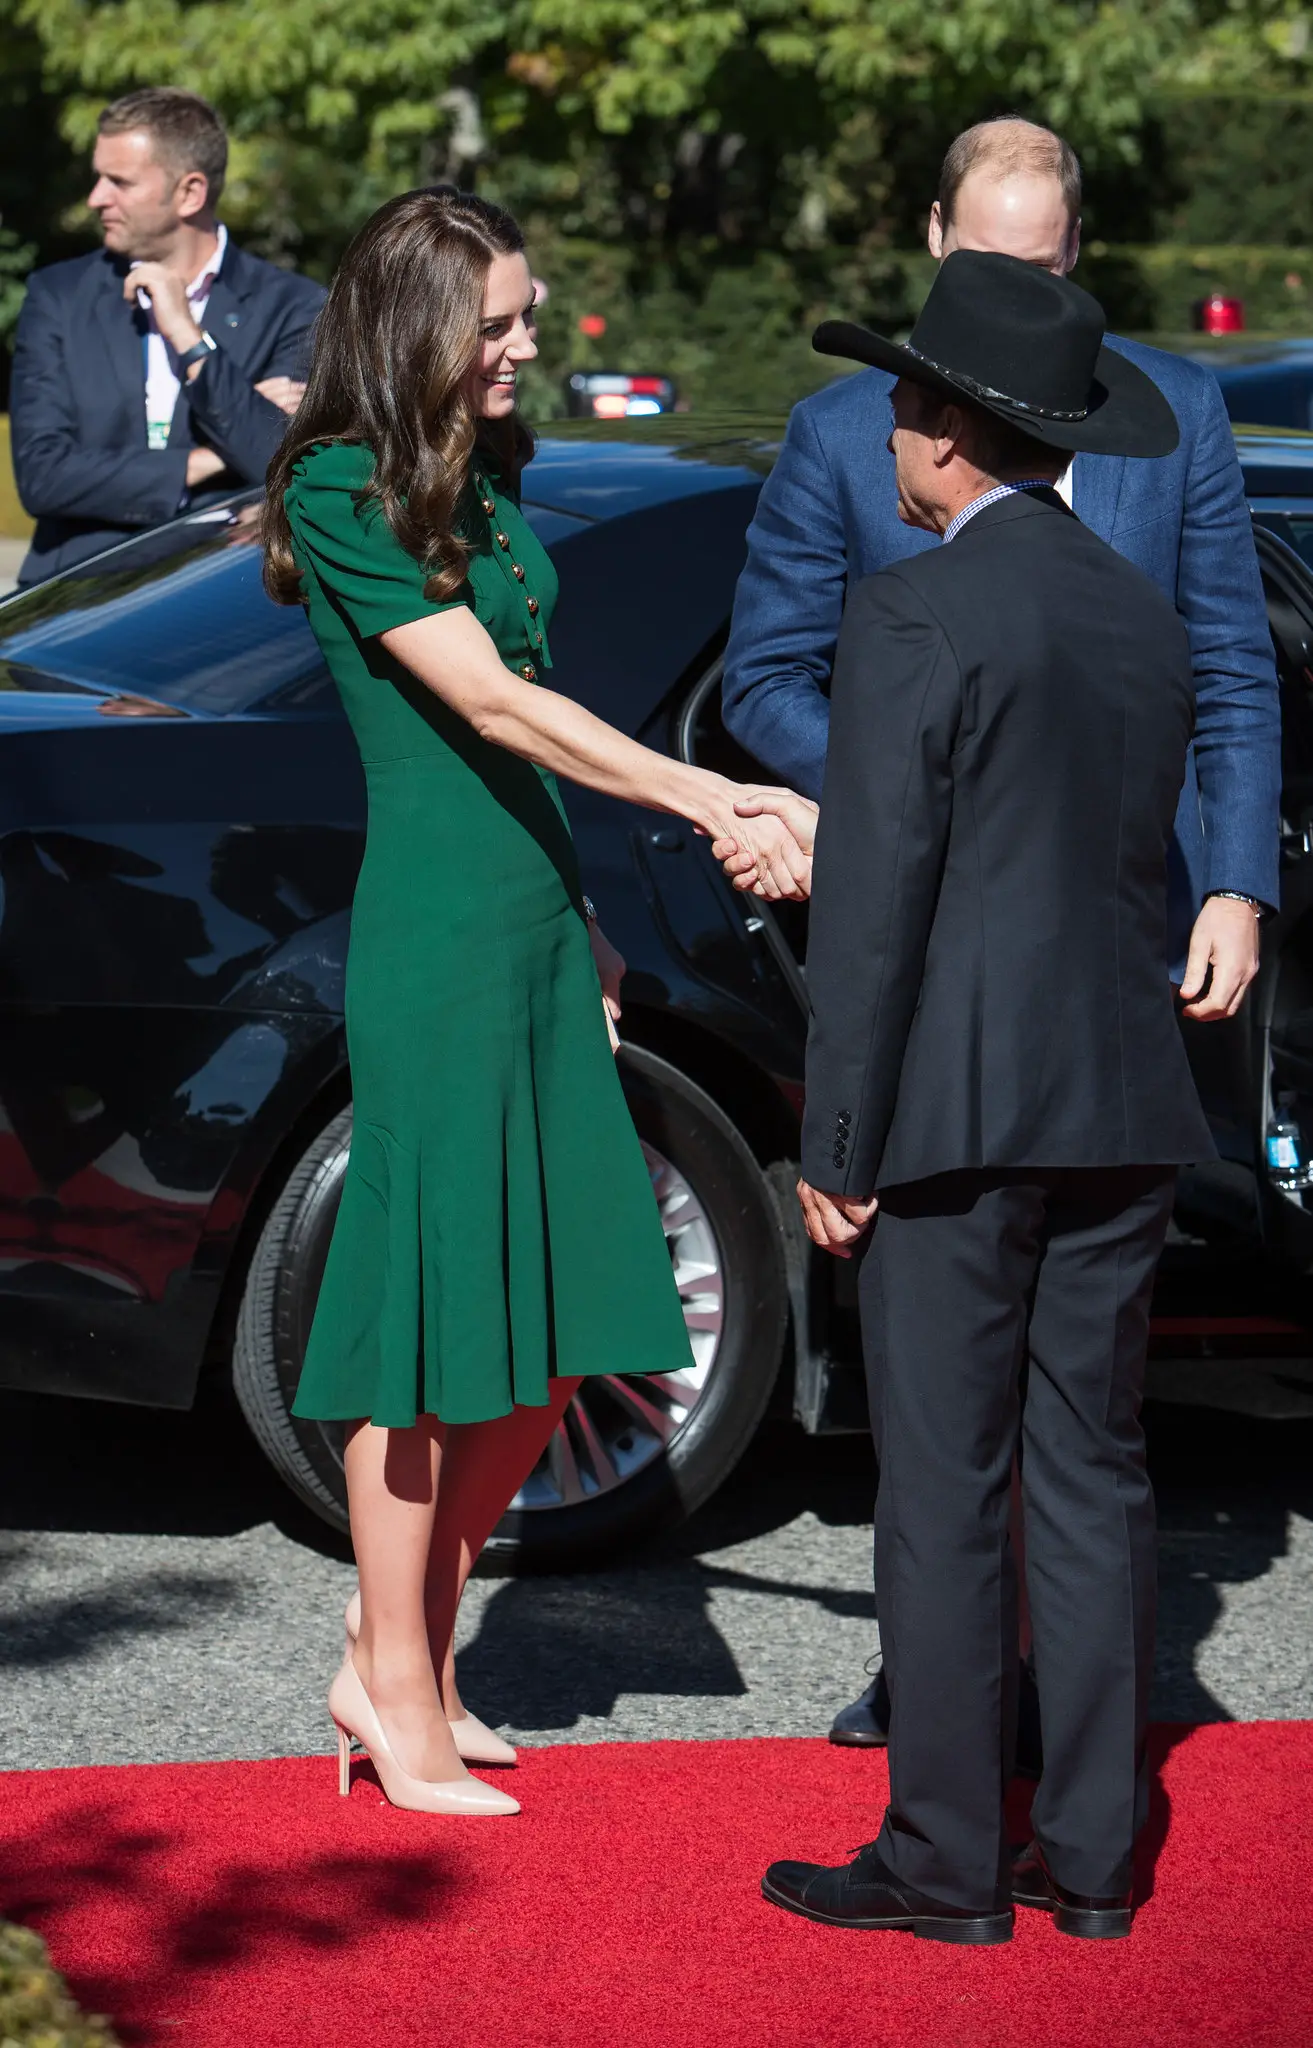 The Duchess of Cambridge wore LK Bennett Pumps in Canada in 2016